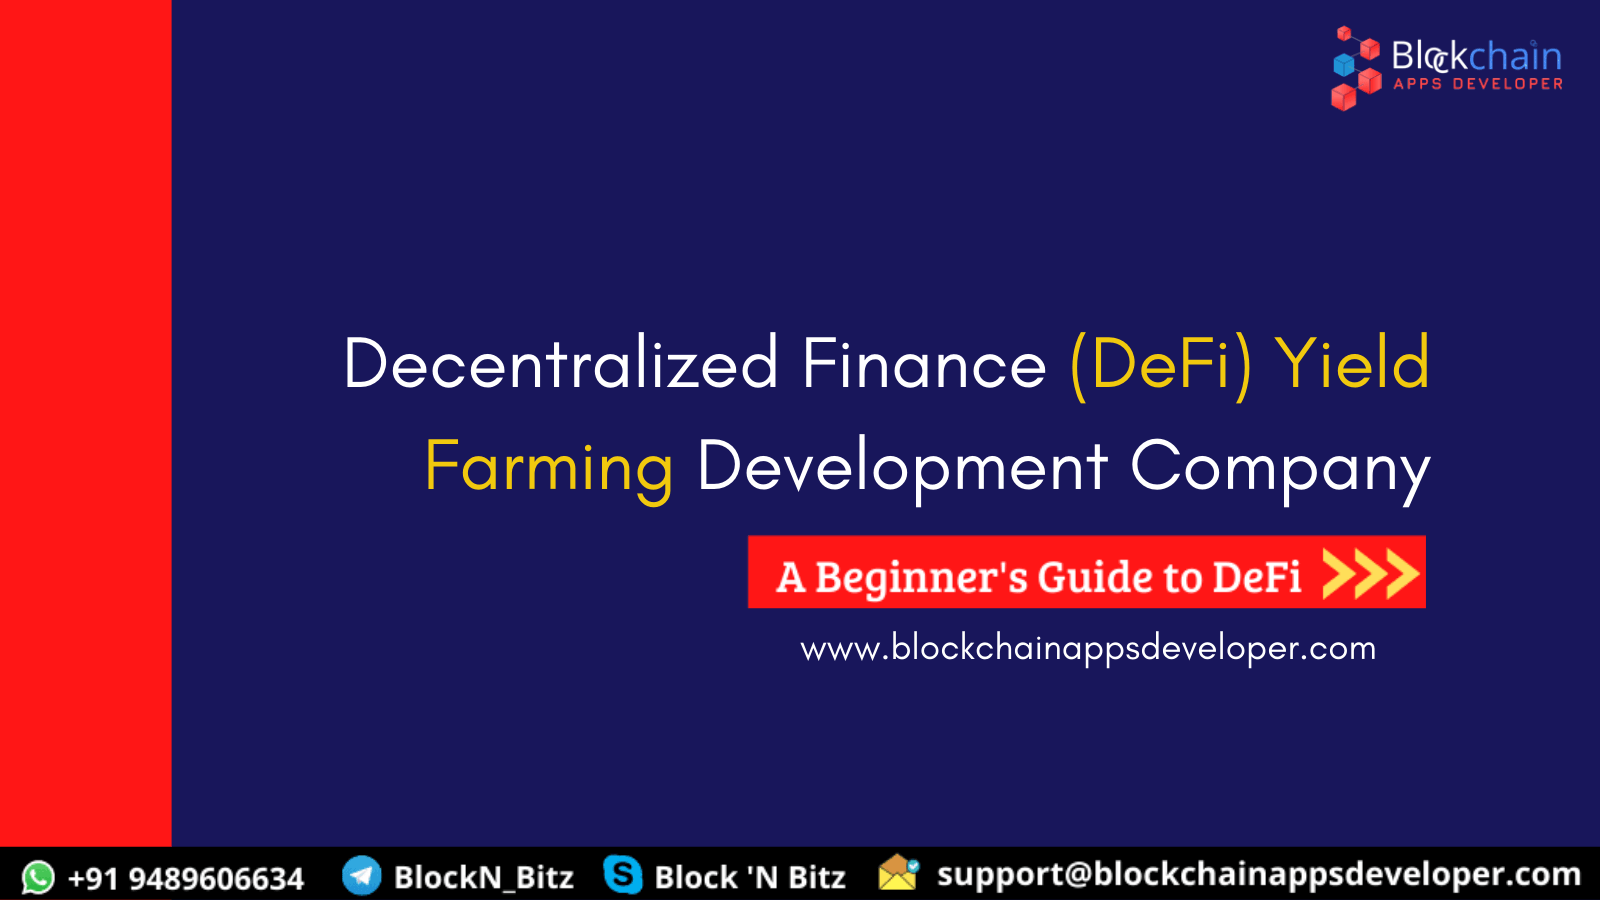 DeFi Yield Farming Development Services Company